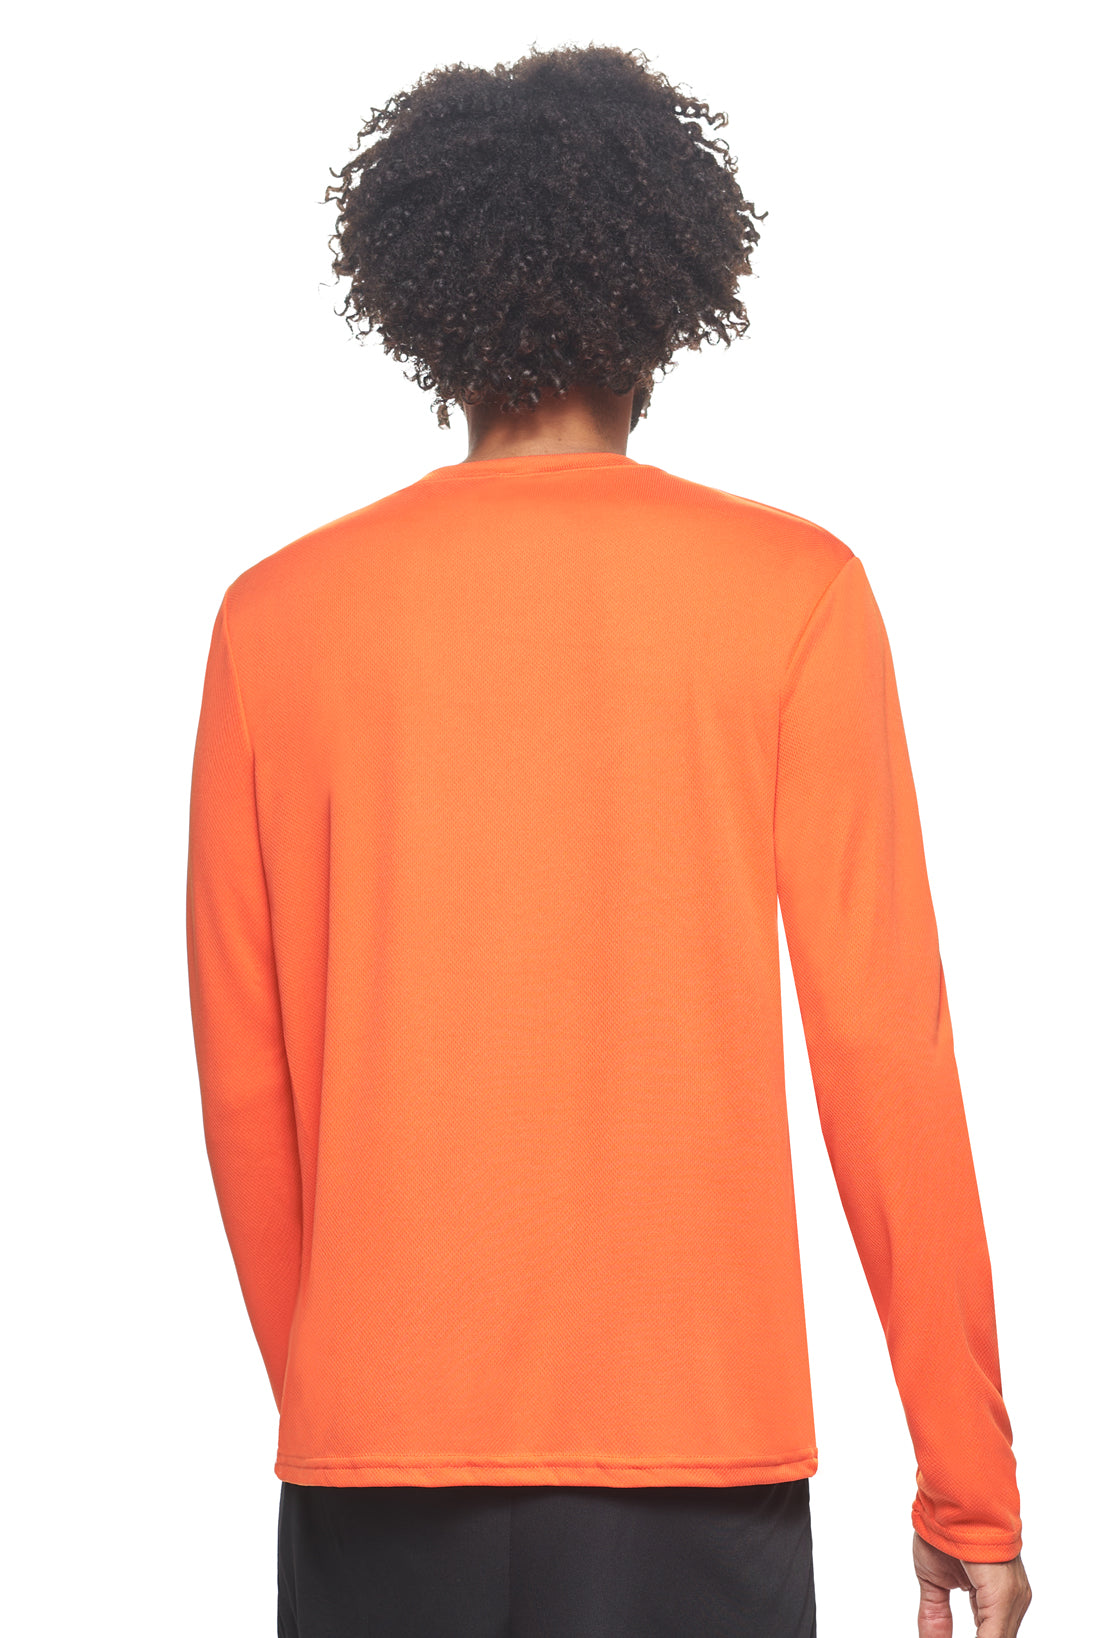 Expert Brand Wholesale Men's Oxymesh Performance Long Sleeve Tec Tee Made in USA AJ901D Orange Image 3#orange